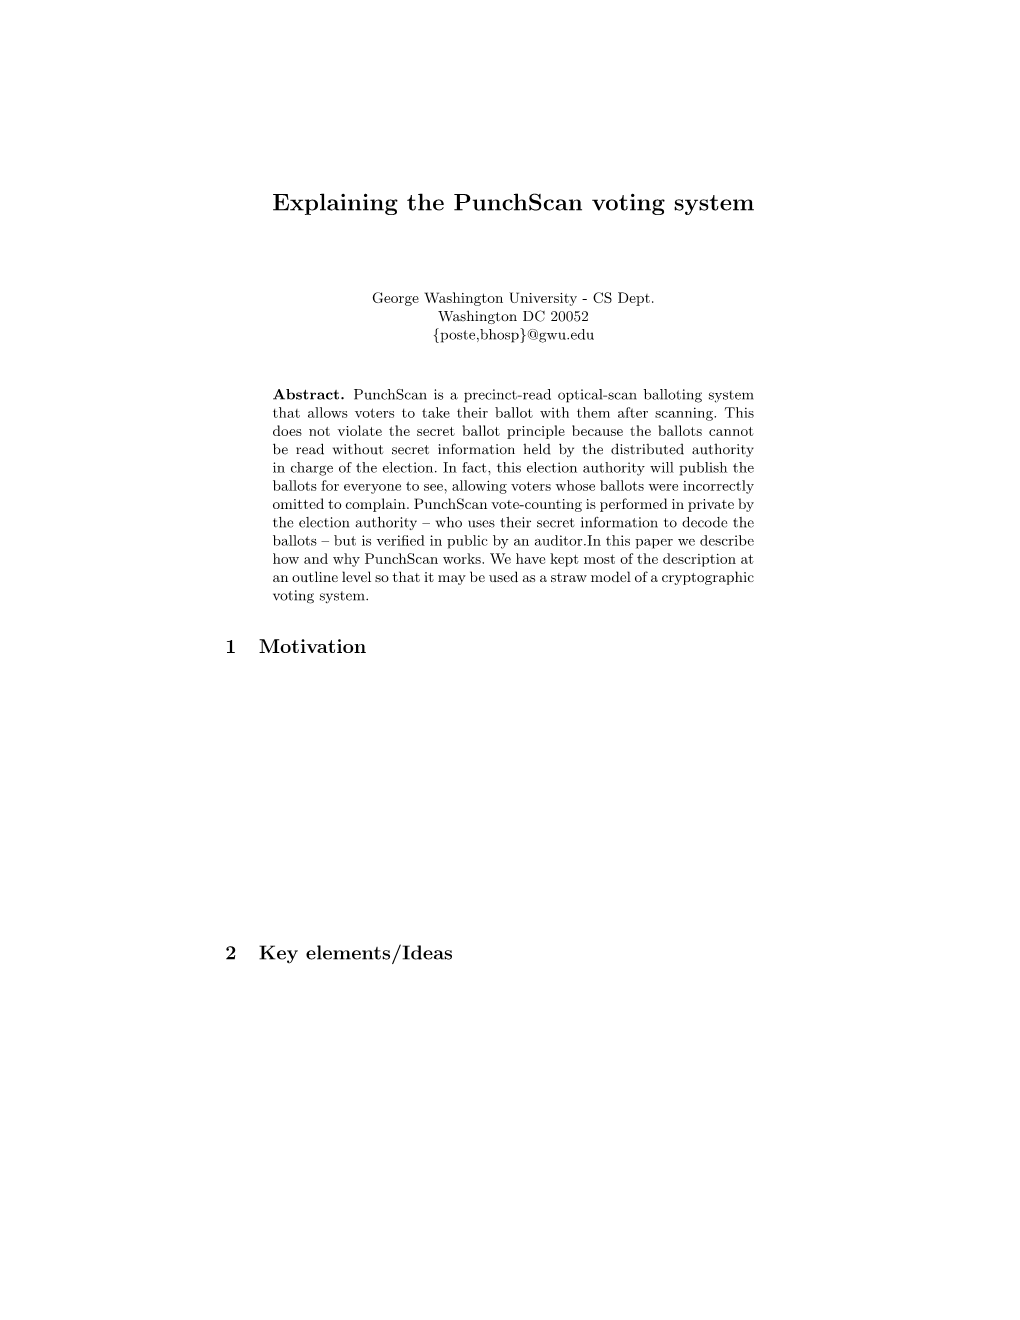 Explaining the Punchscan Voting System